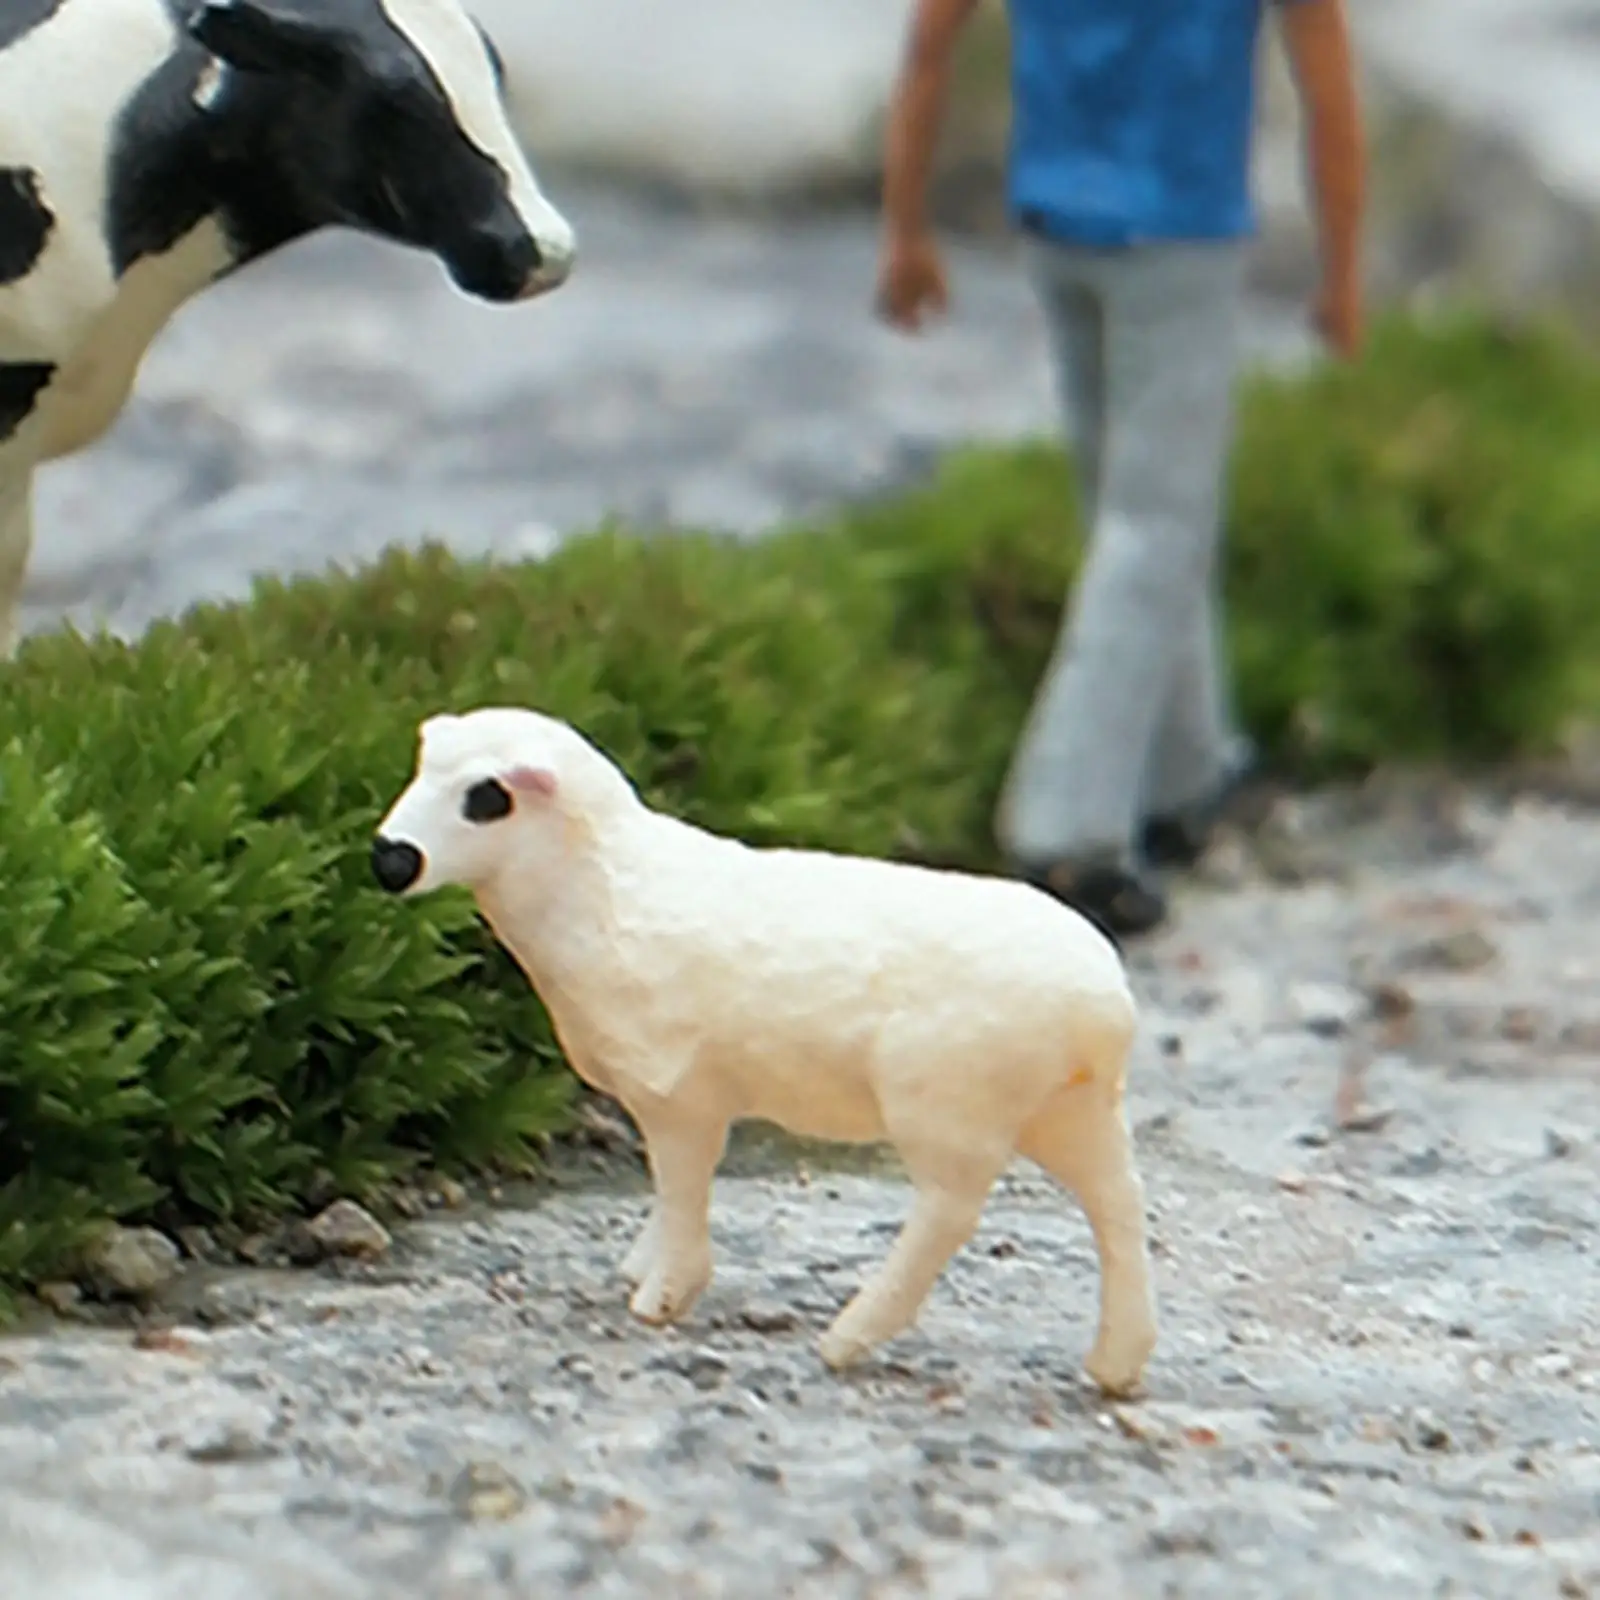 Sheep Figurine 1:64 Miniature Figures Realistic Figurine Model Animal Figures Miniature Scene Ornament Model Building Kits